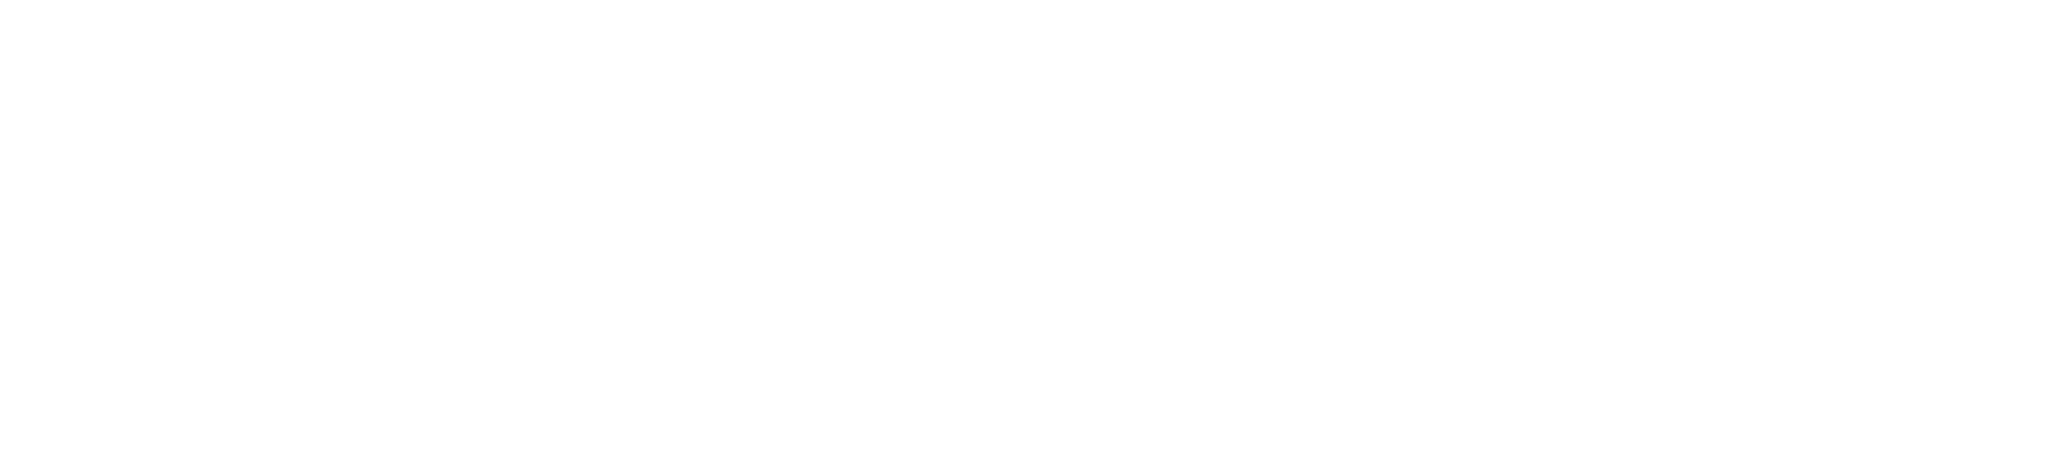 Migros-Kulturprozent